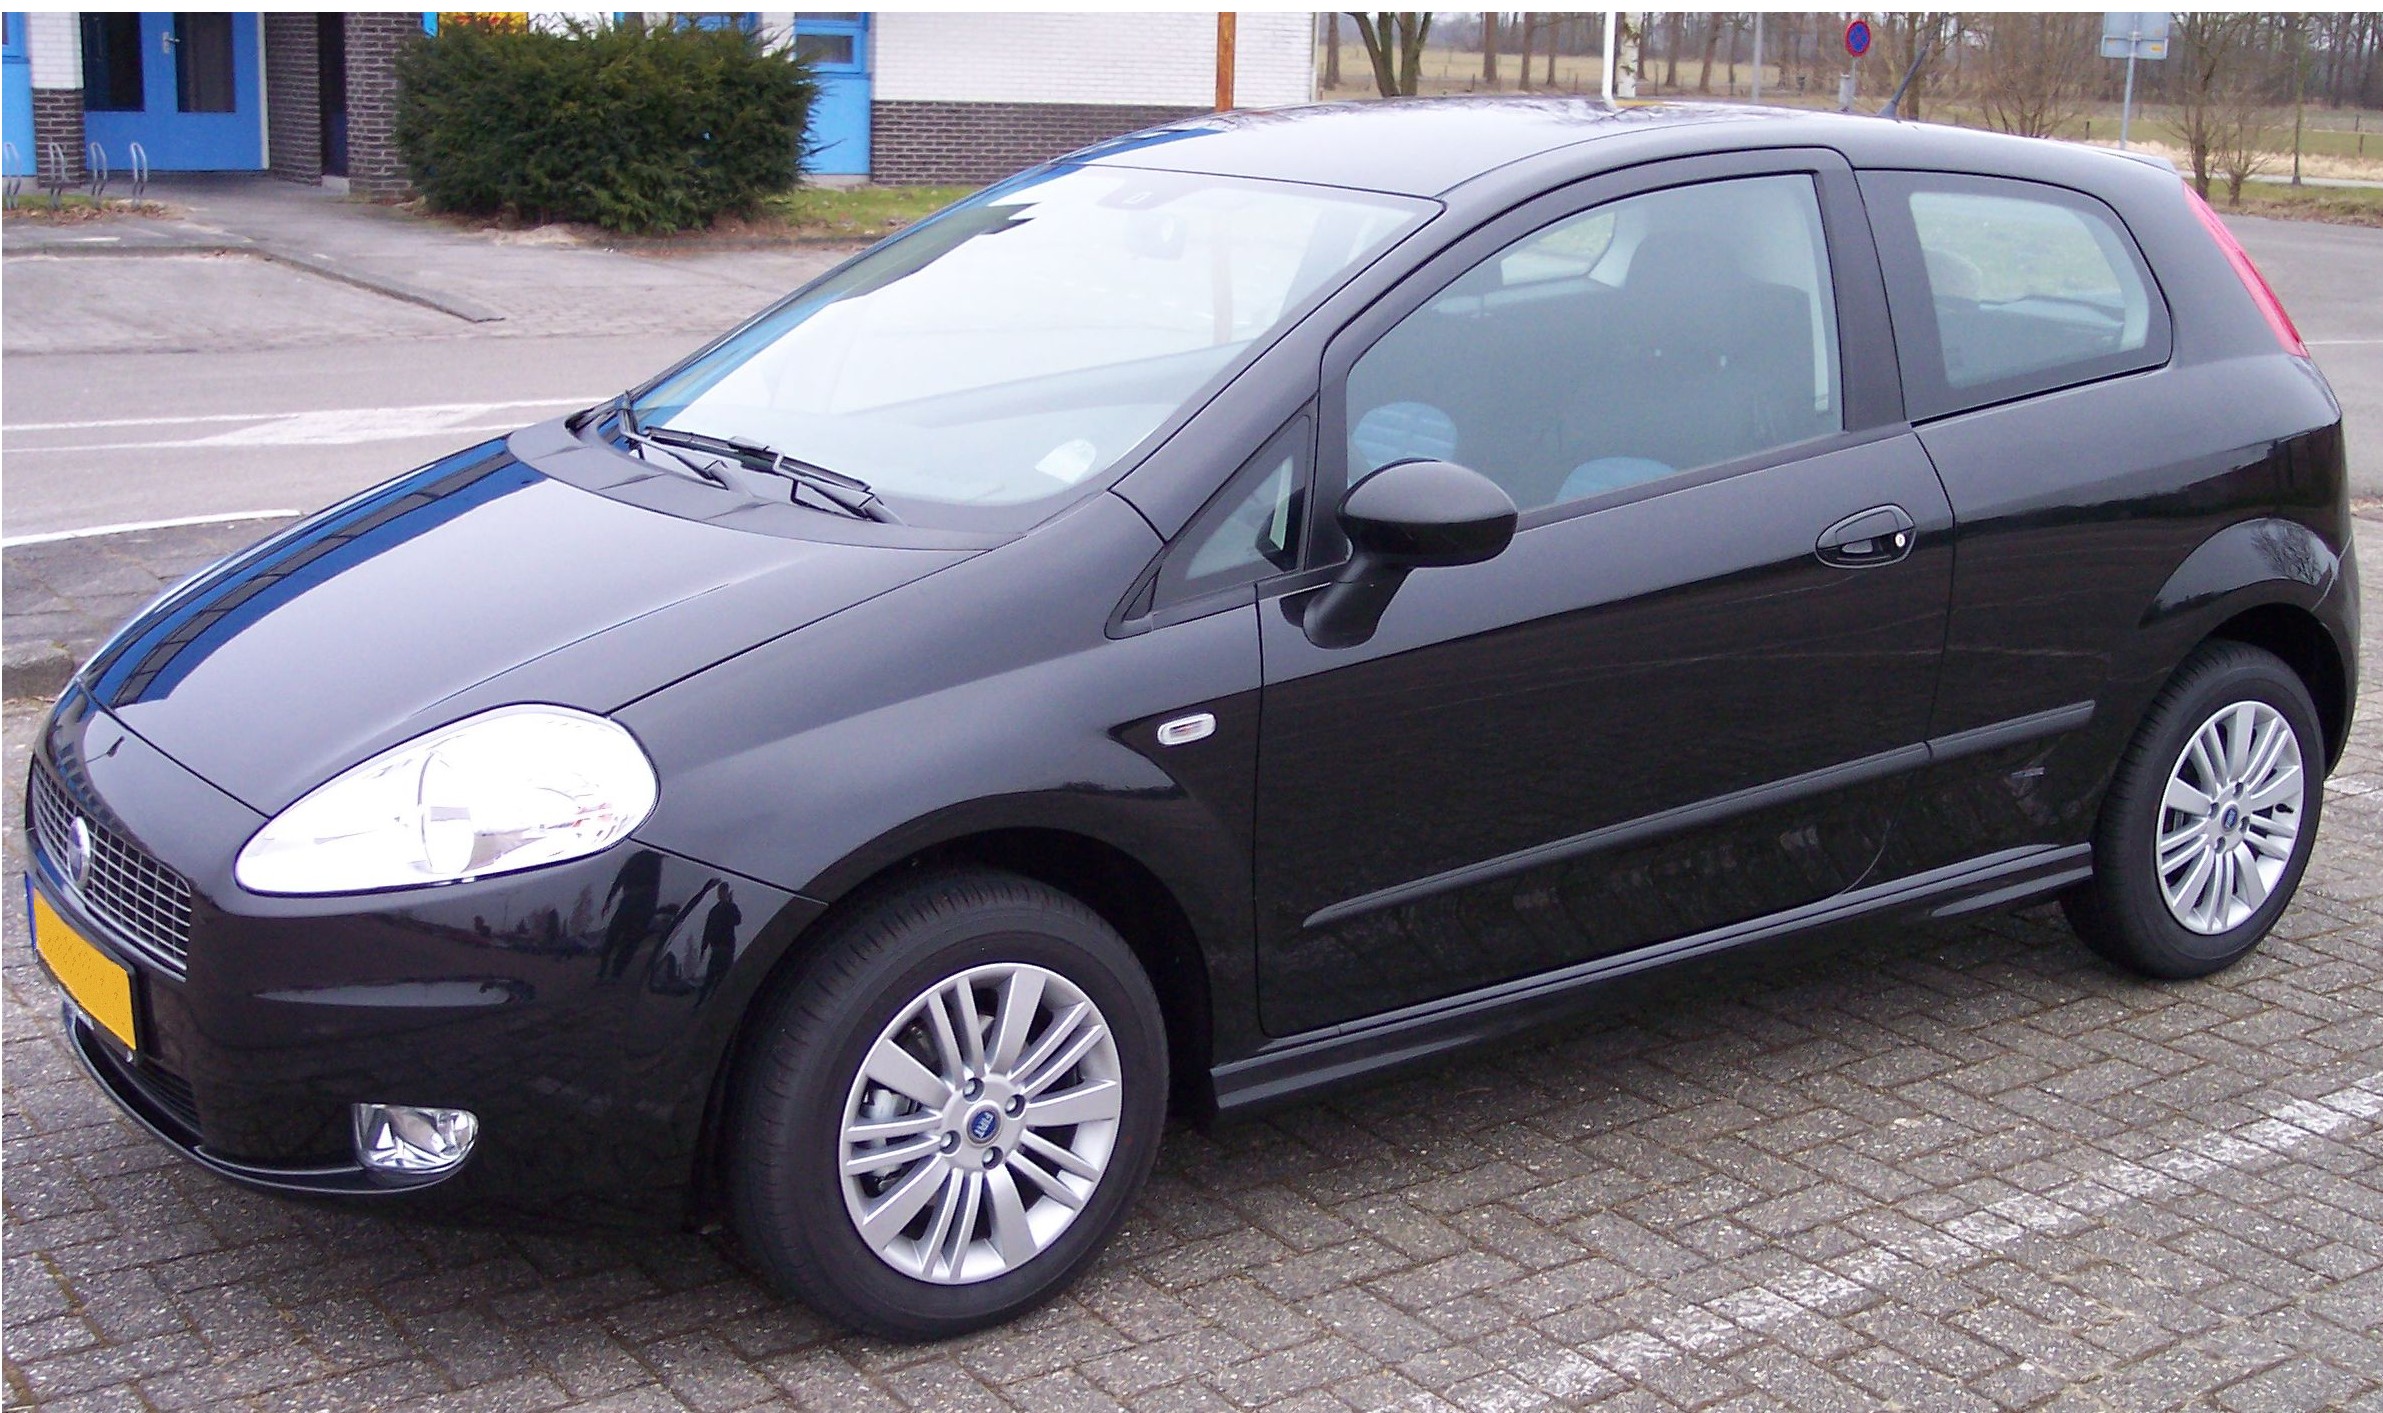 Dossier: Fiat Punto 2006 vl noir - édition.jpg - Wikimedia Commons